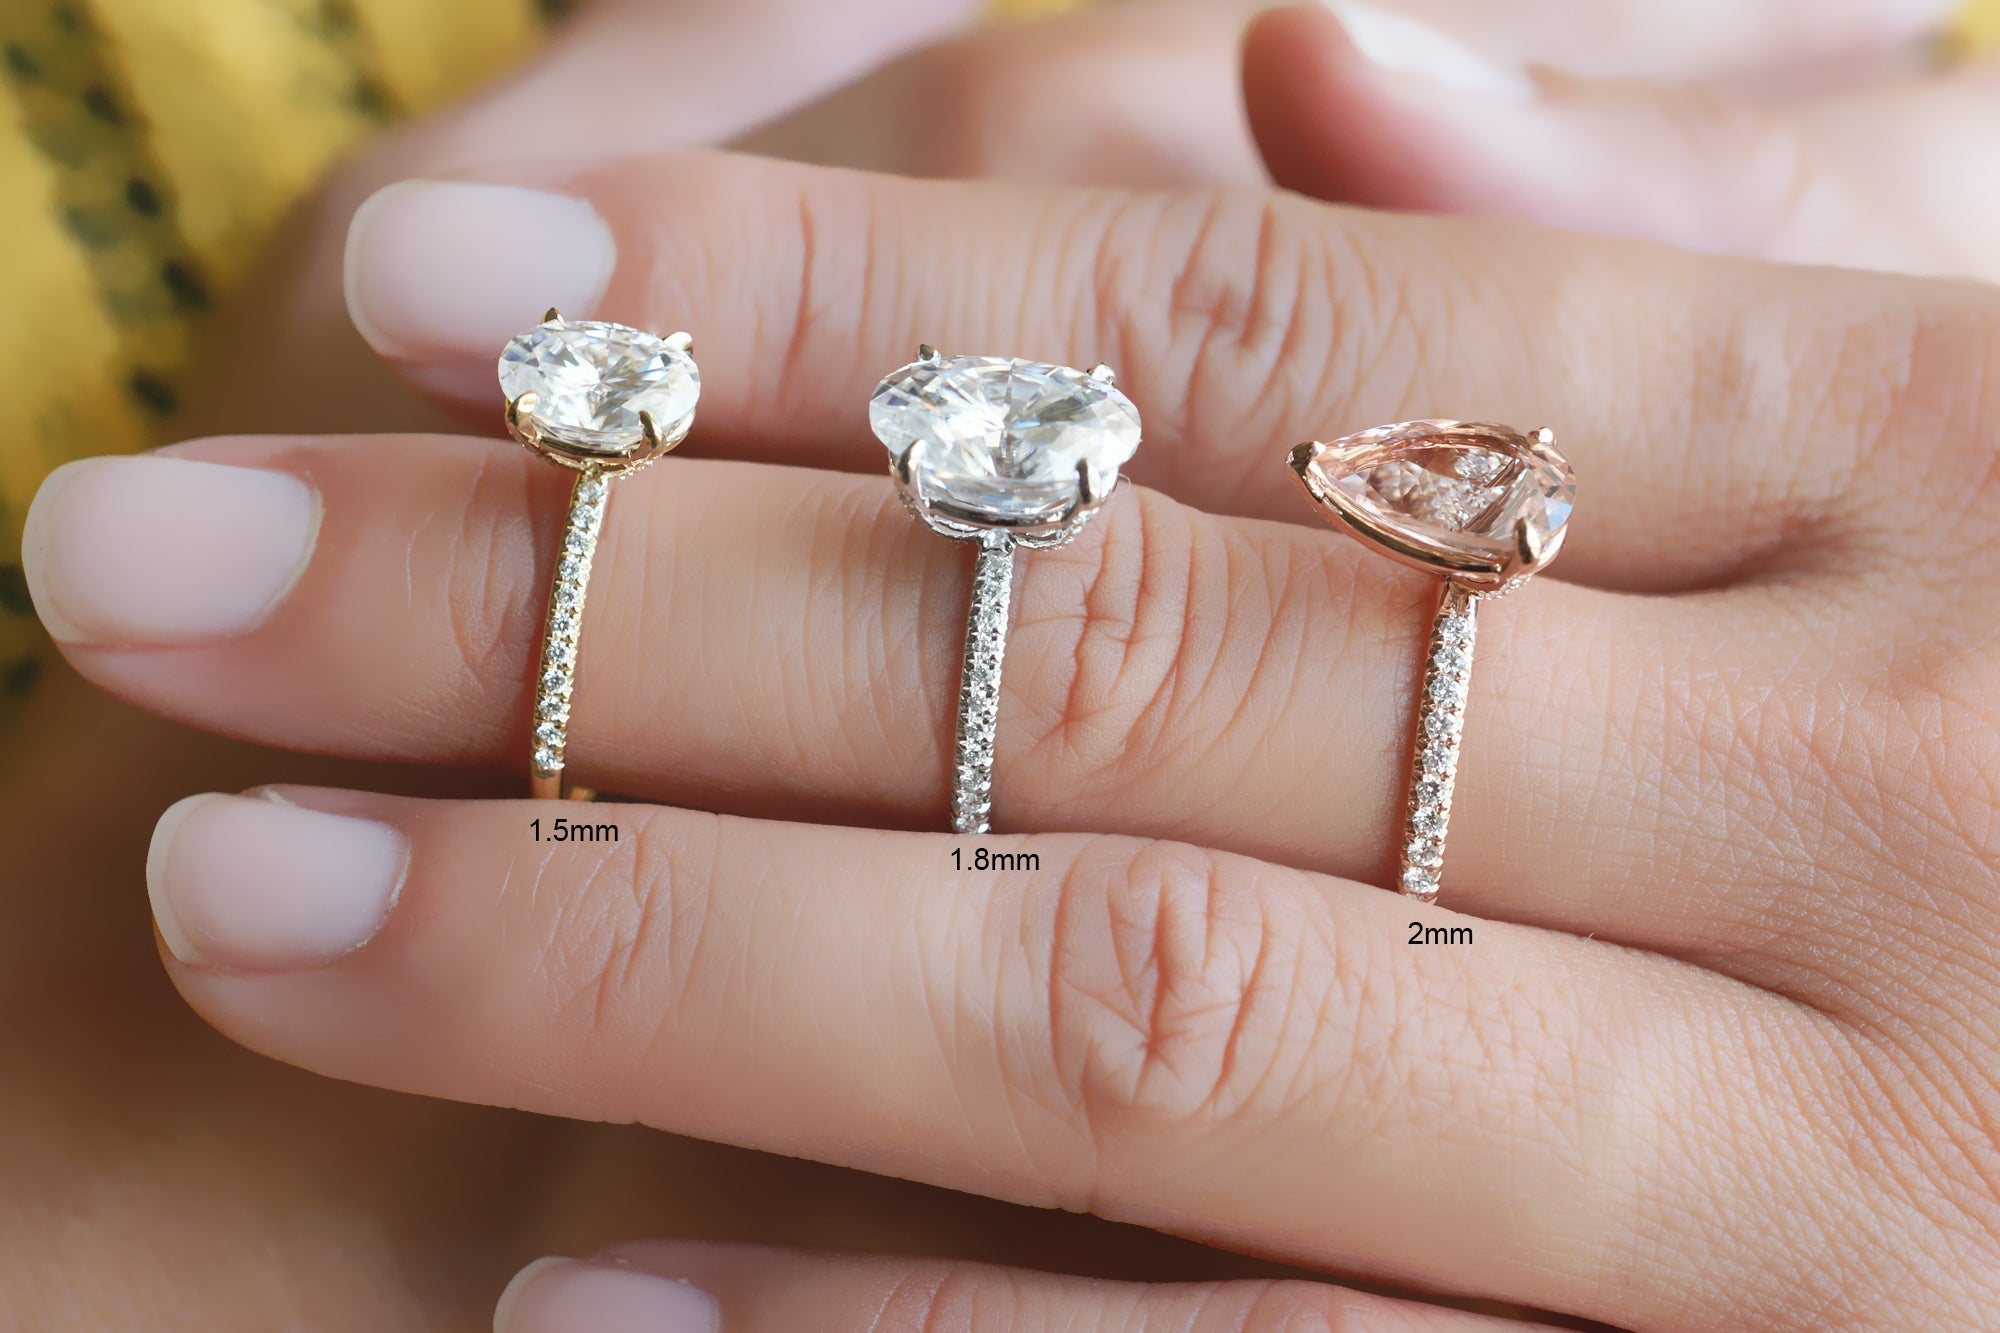 The Ava Heart Shape Diamond Ring ( Lab-Grown)